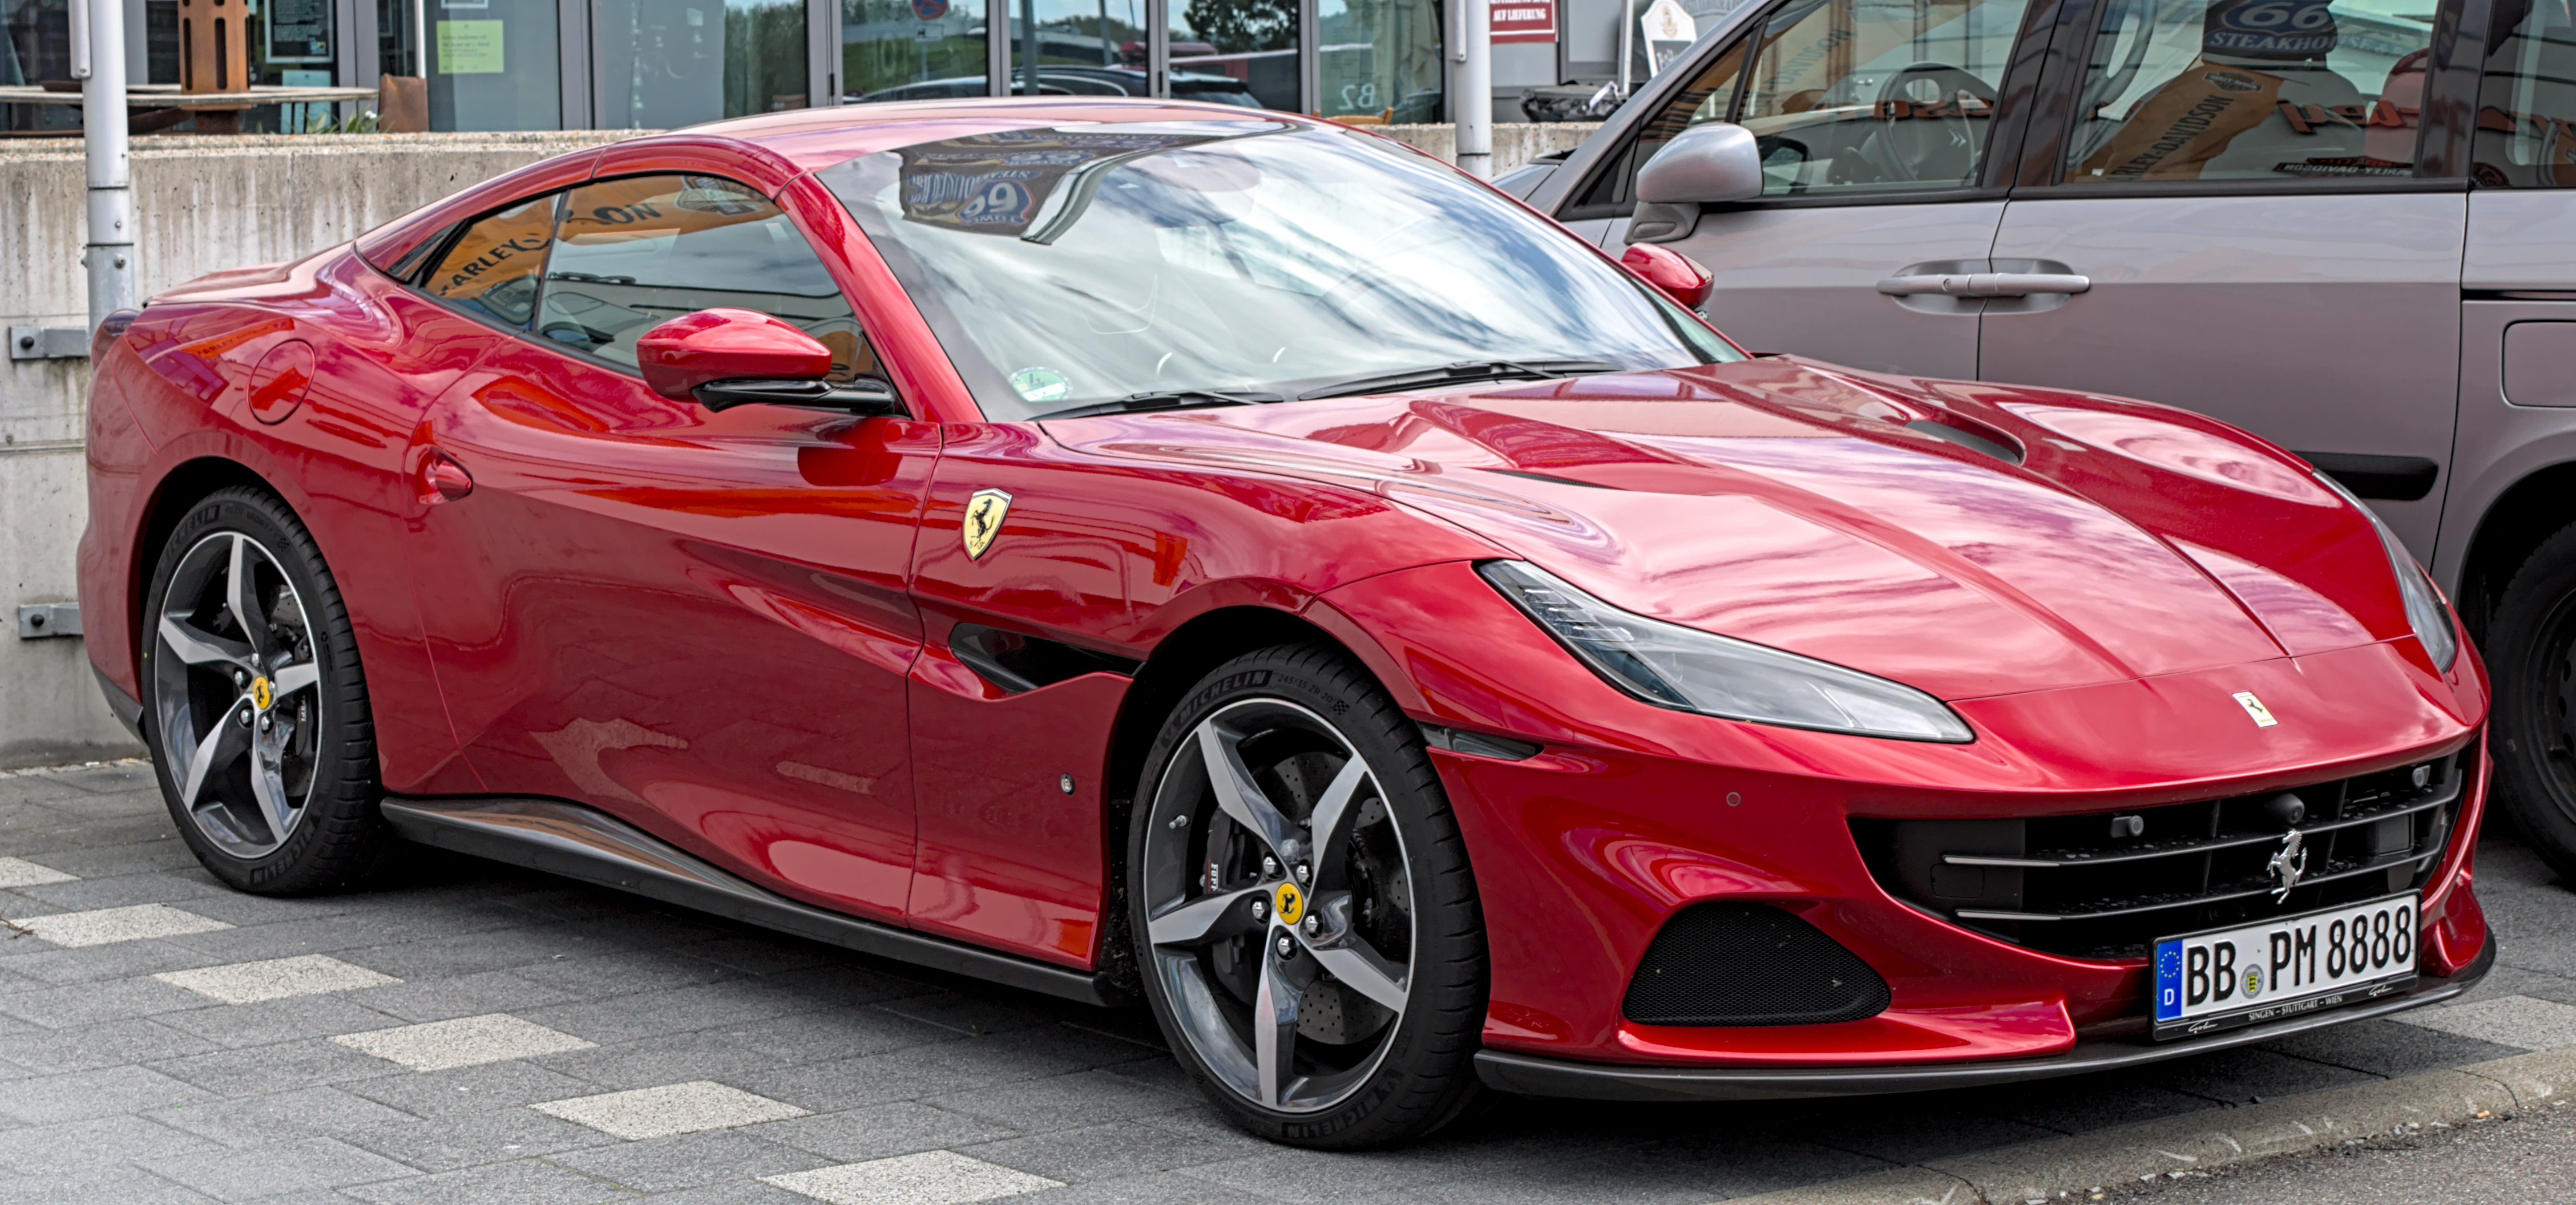 Ferrari Portofino - Wikipedia